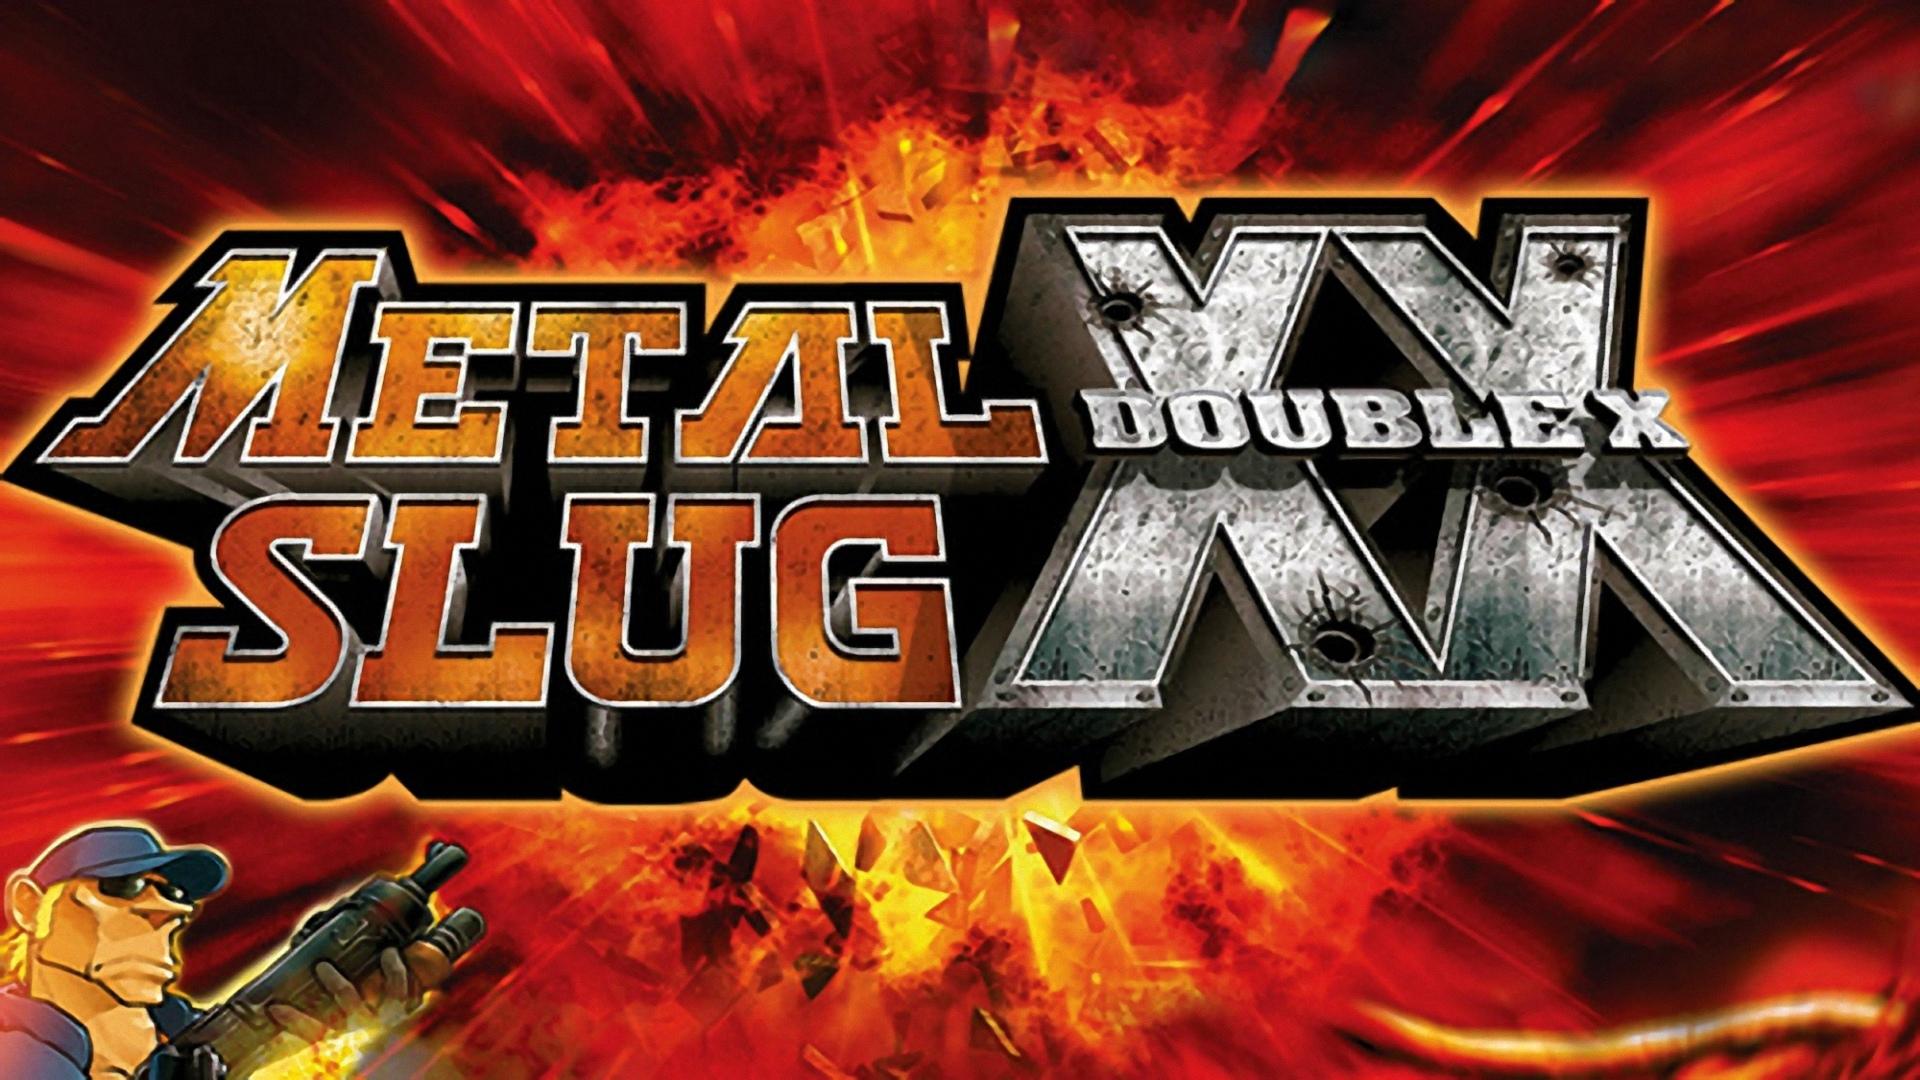 Metal Slug XX at 1600 x 1200 size wallpapers HD quality